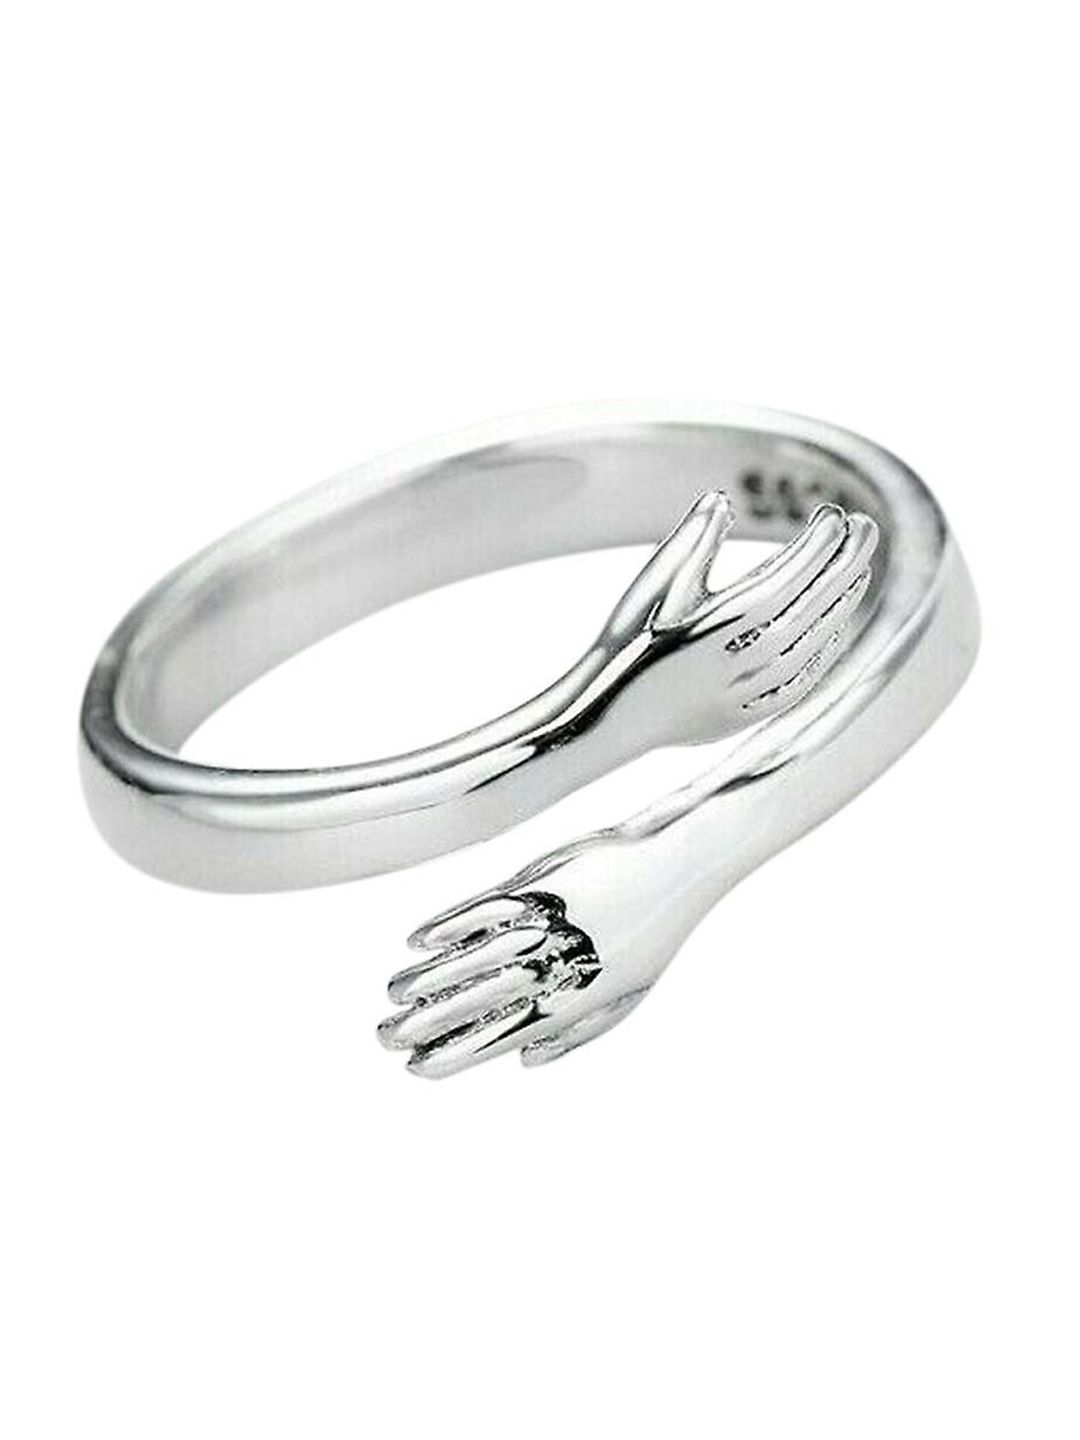 Sarvda Women Silver-Plated Hug Ring Price in India